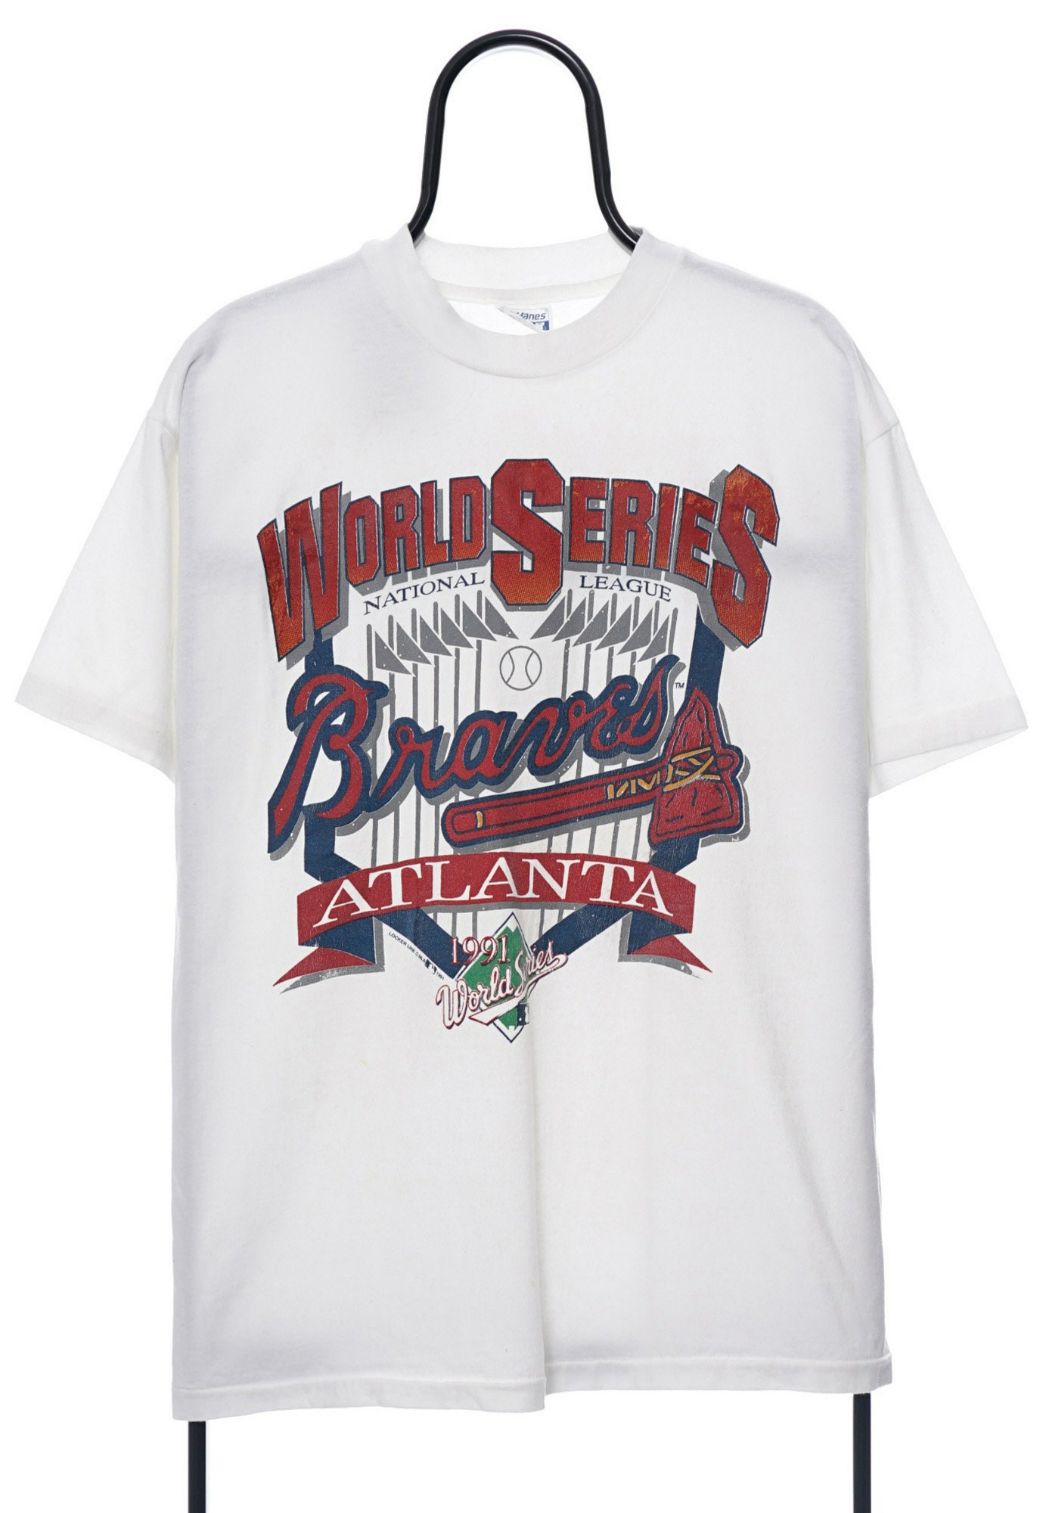 Vintage 90s Mlb Atlanta Braves White Graphic T-Shirt